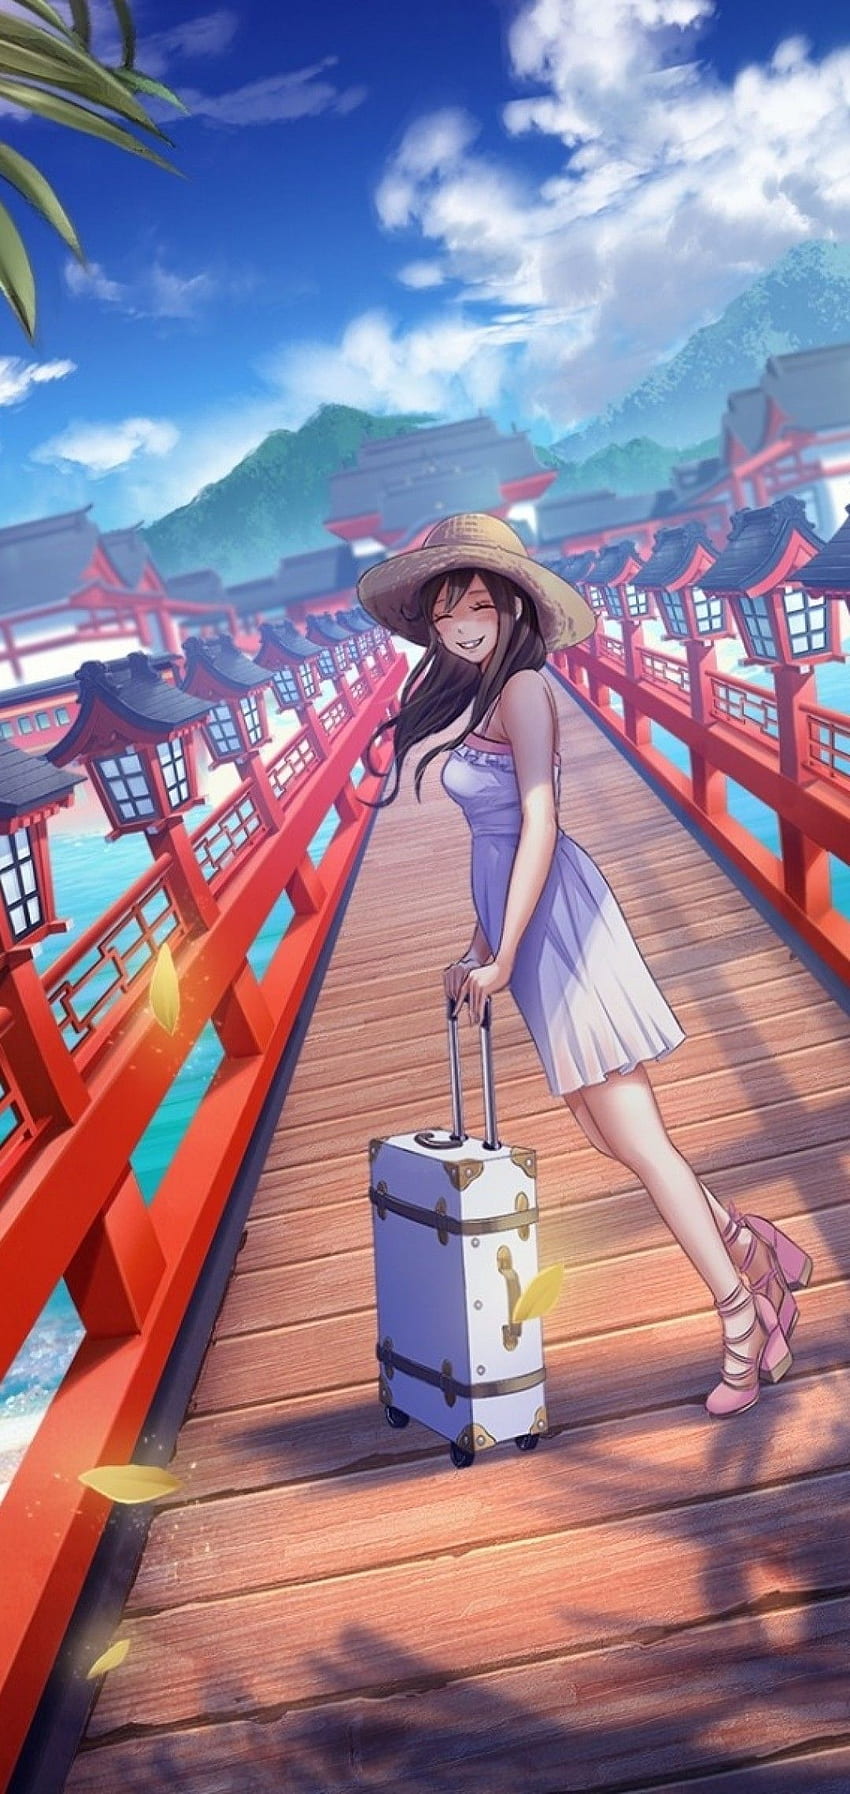 Download free Cute Anime On Beach Vacation Wallpaper - MrWallpaper.com